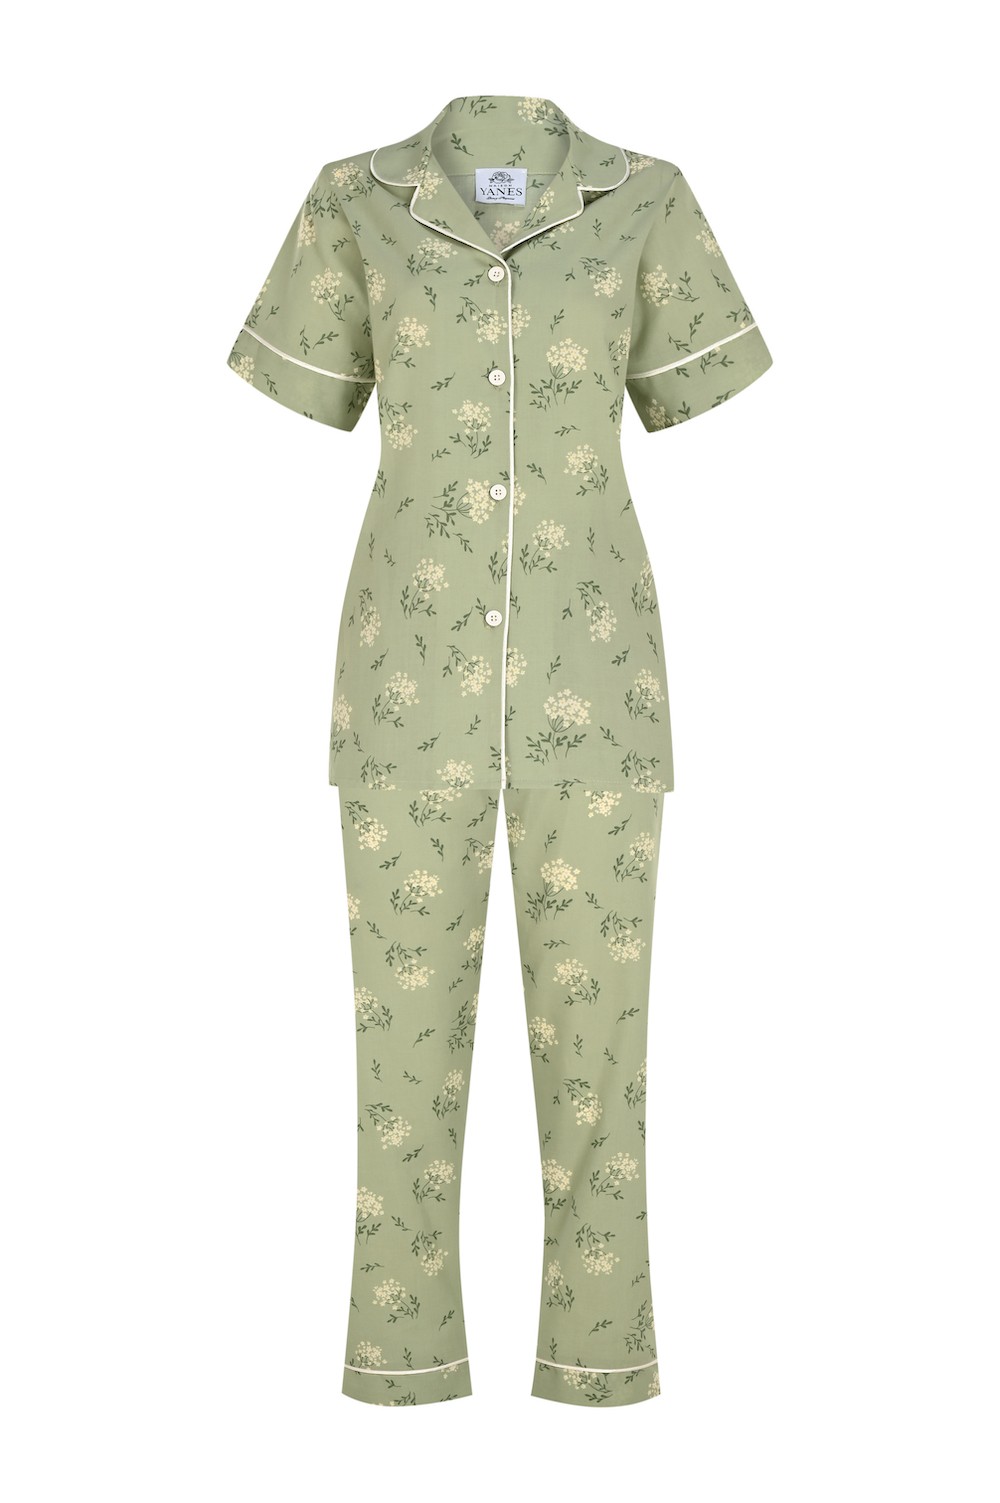 English Garden Women's Short Sleeve Pajamas Set